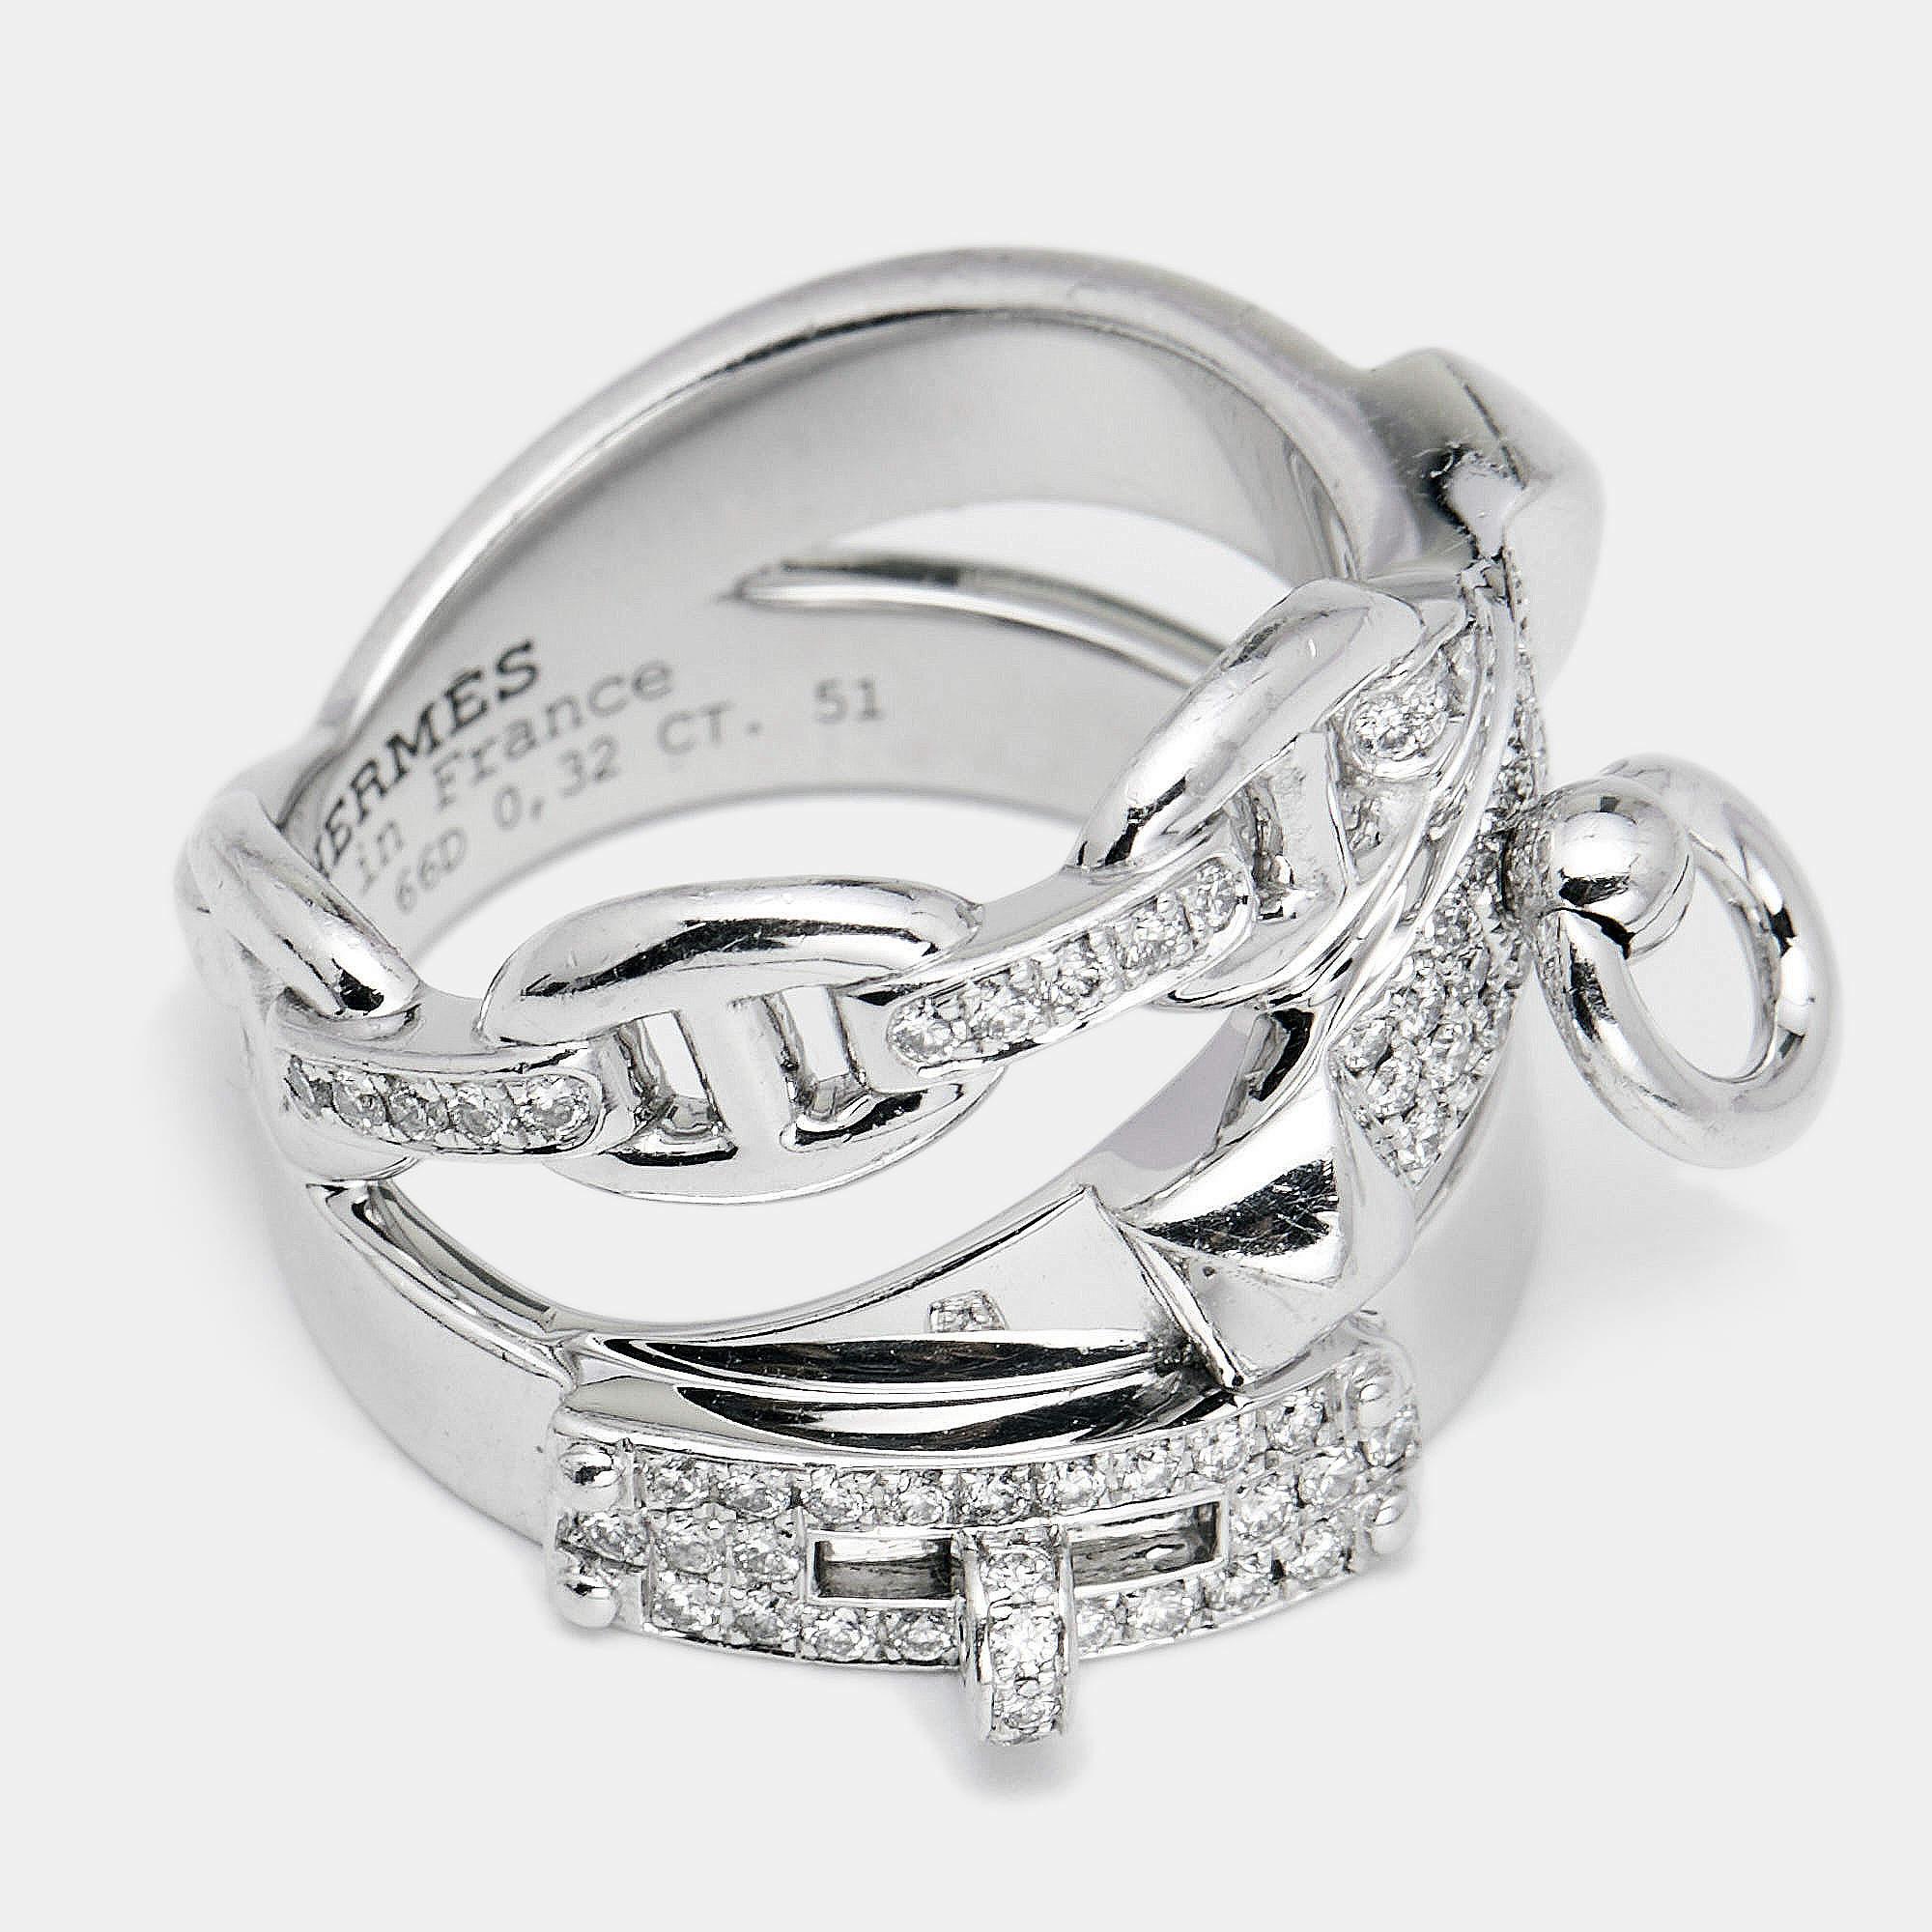 Contemporary Hermes Alchimie Hermes Diamonds 18k White Gold Large Model Charm Ring Size 51